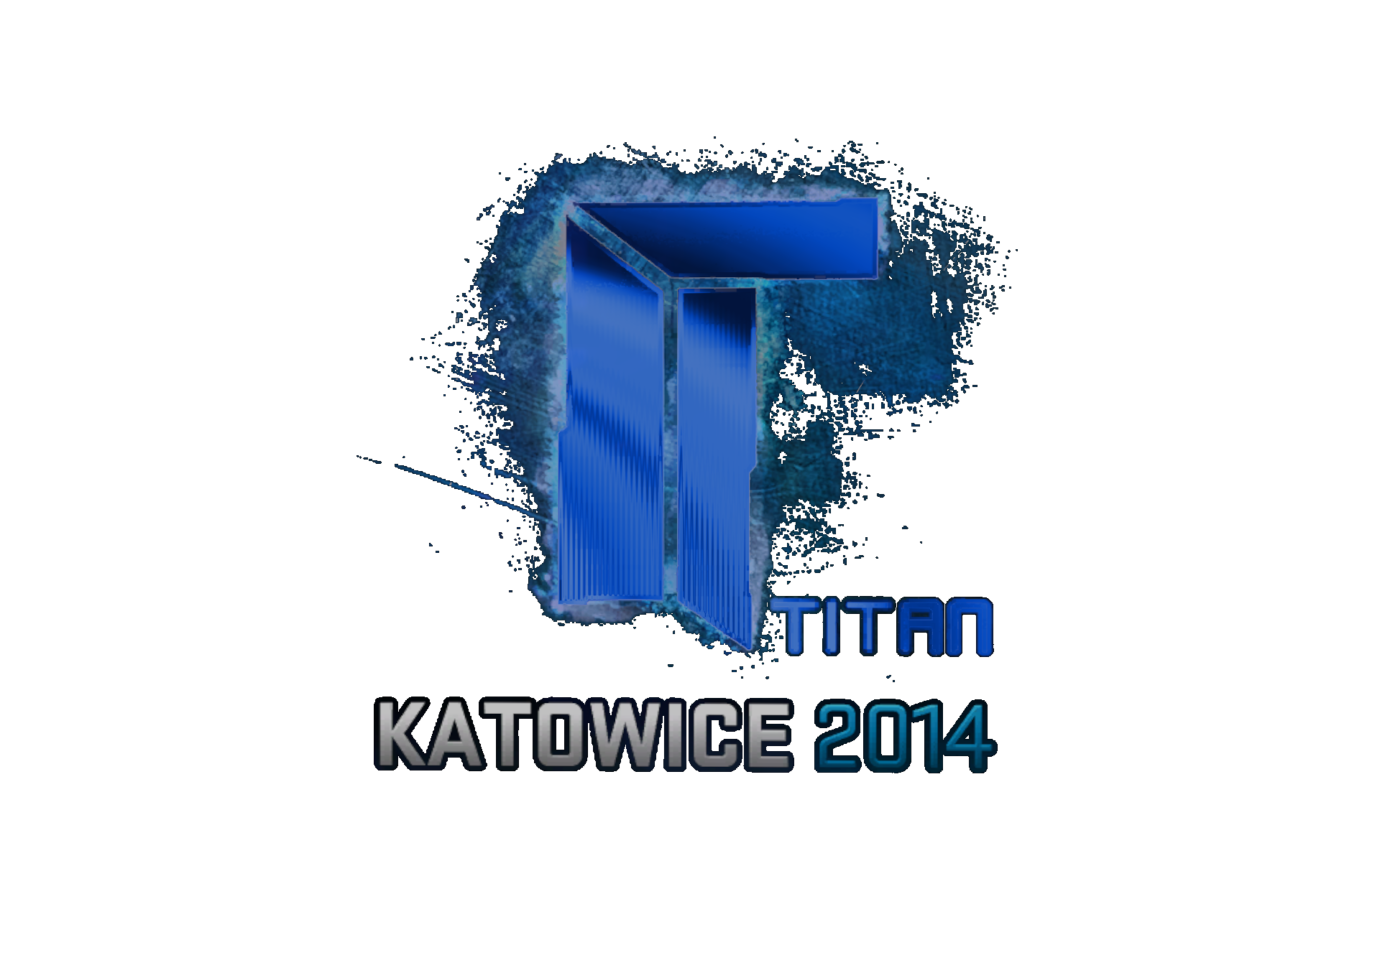 Katowice 2015 Stickers - CS2 Stash